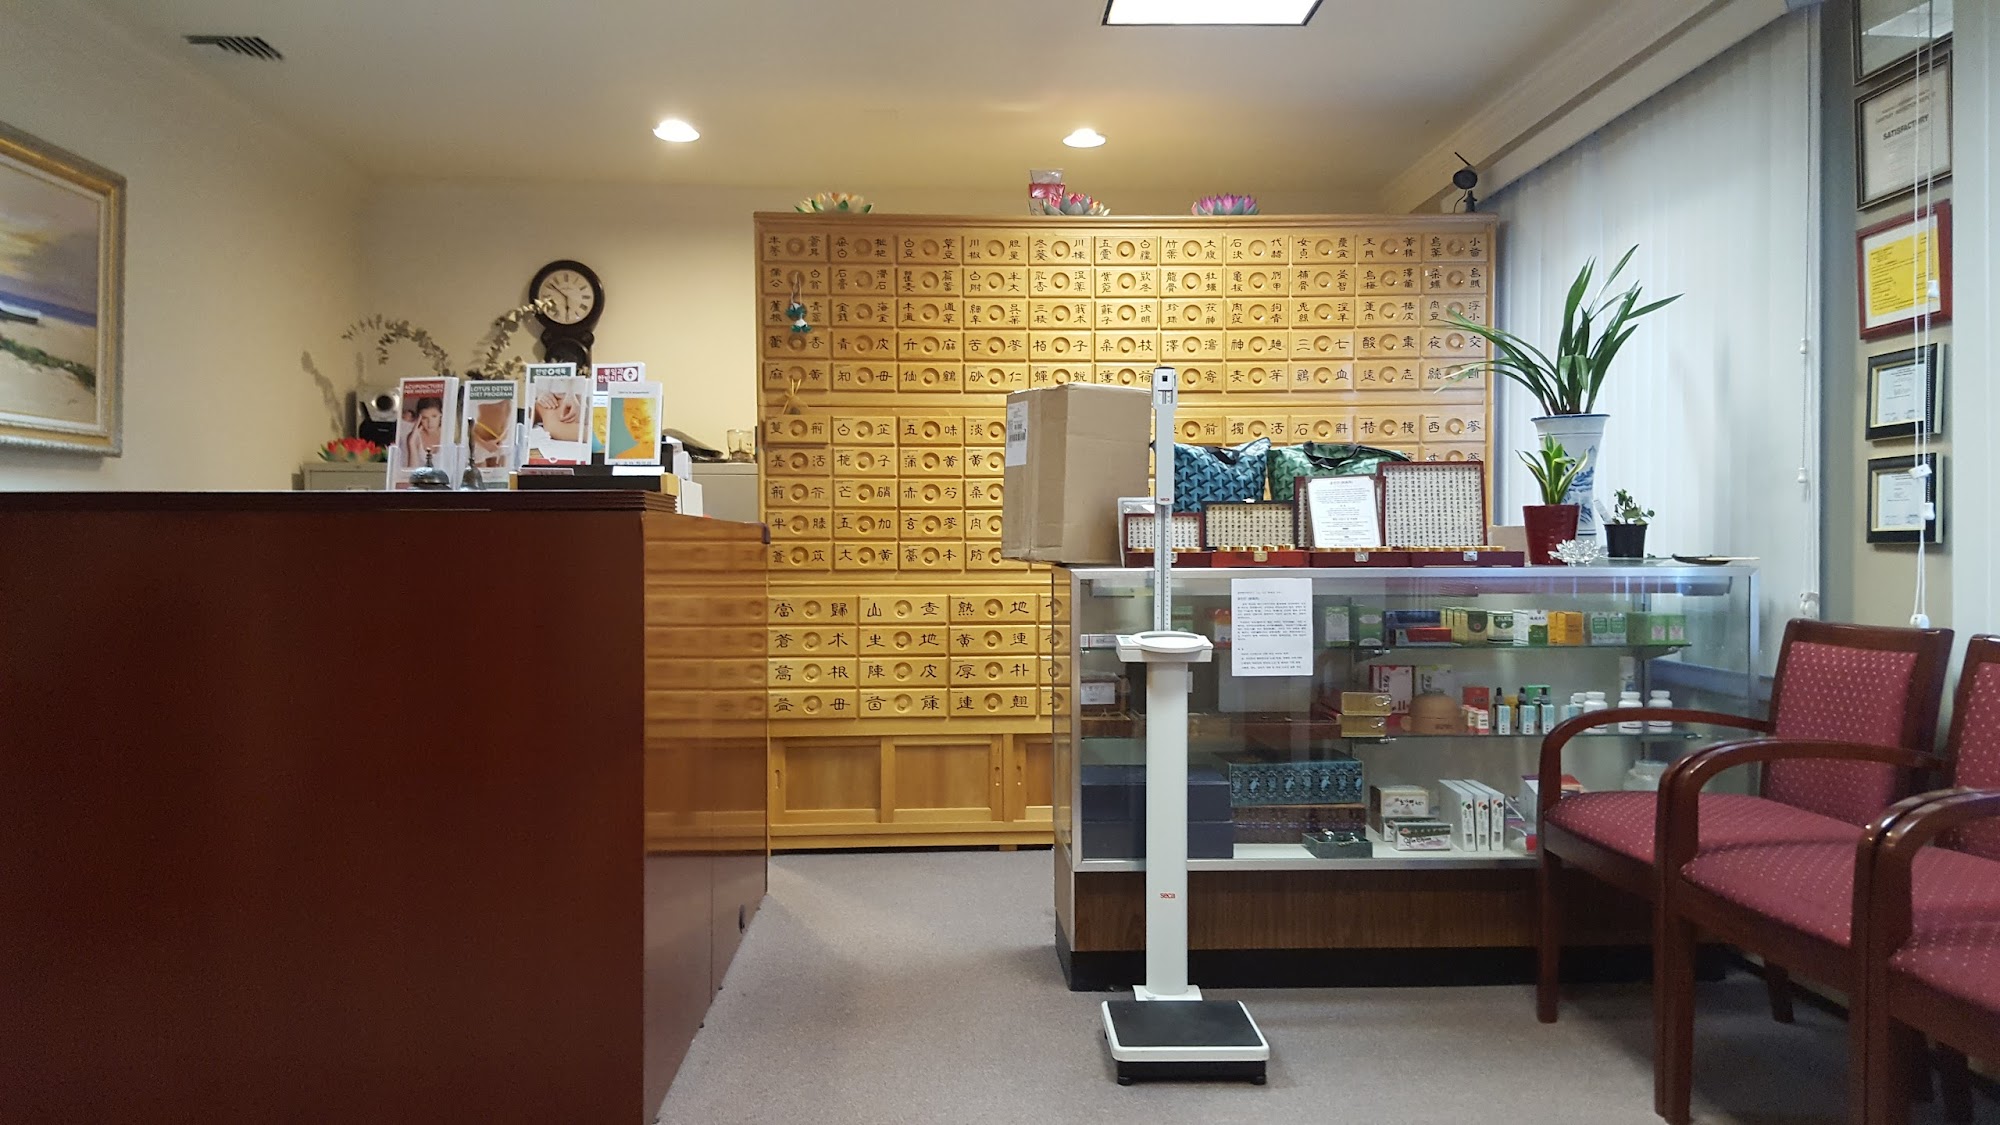 Acupuncture & Herb Clinic | 뉴저지 중앙 한의원 | 뉴저지 한의원, Acupuncture in Ridgefield, NJ